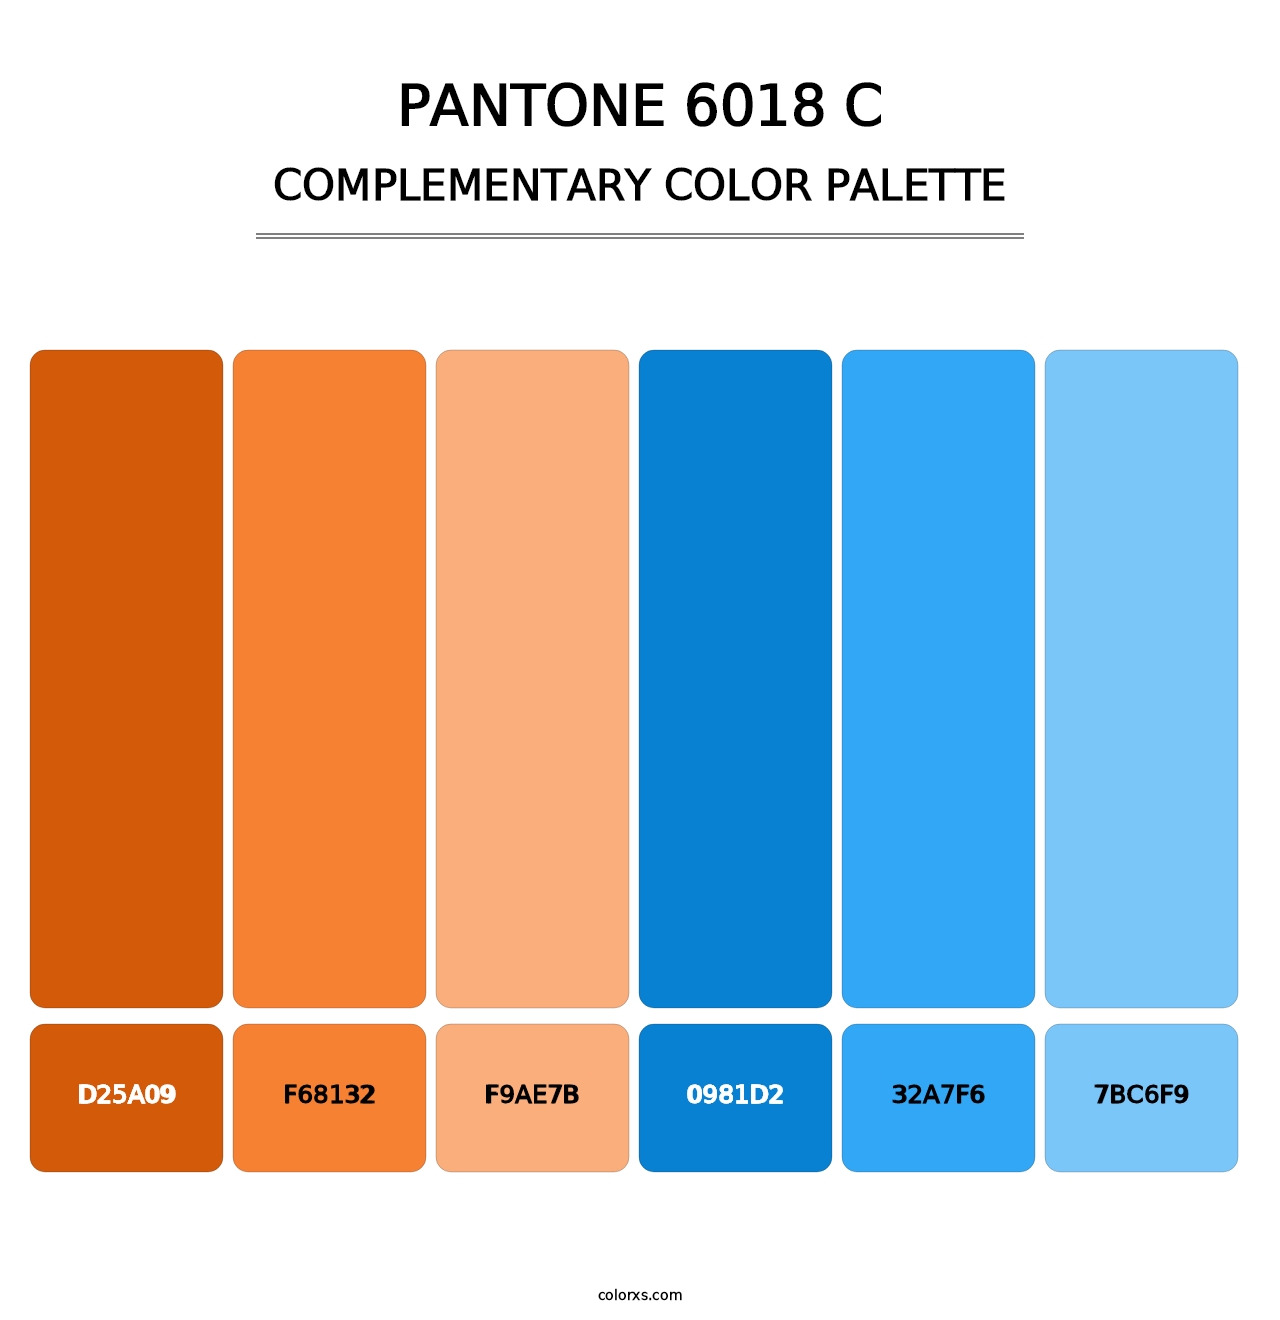 PANTONE 6018 C - Complementary Color Palette